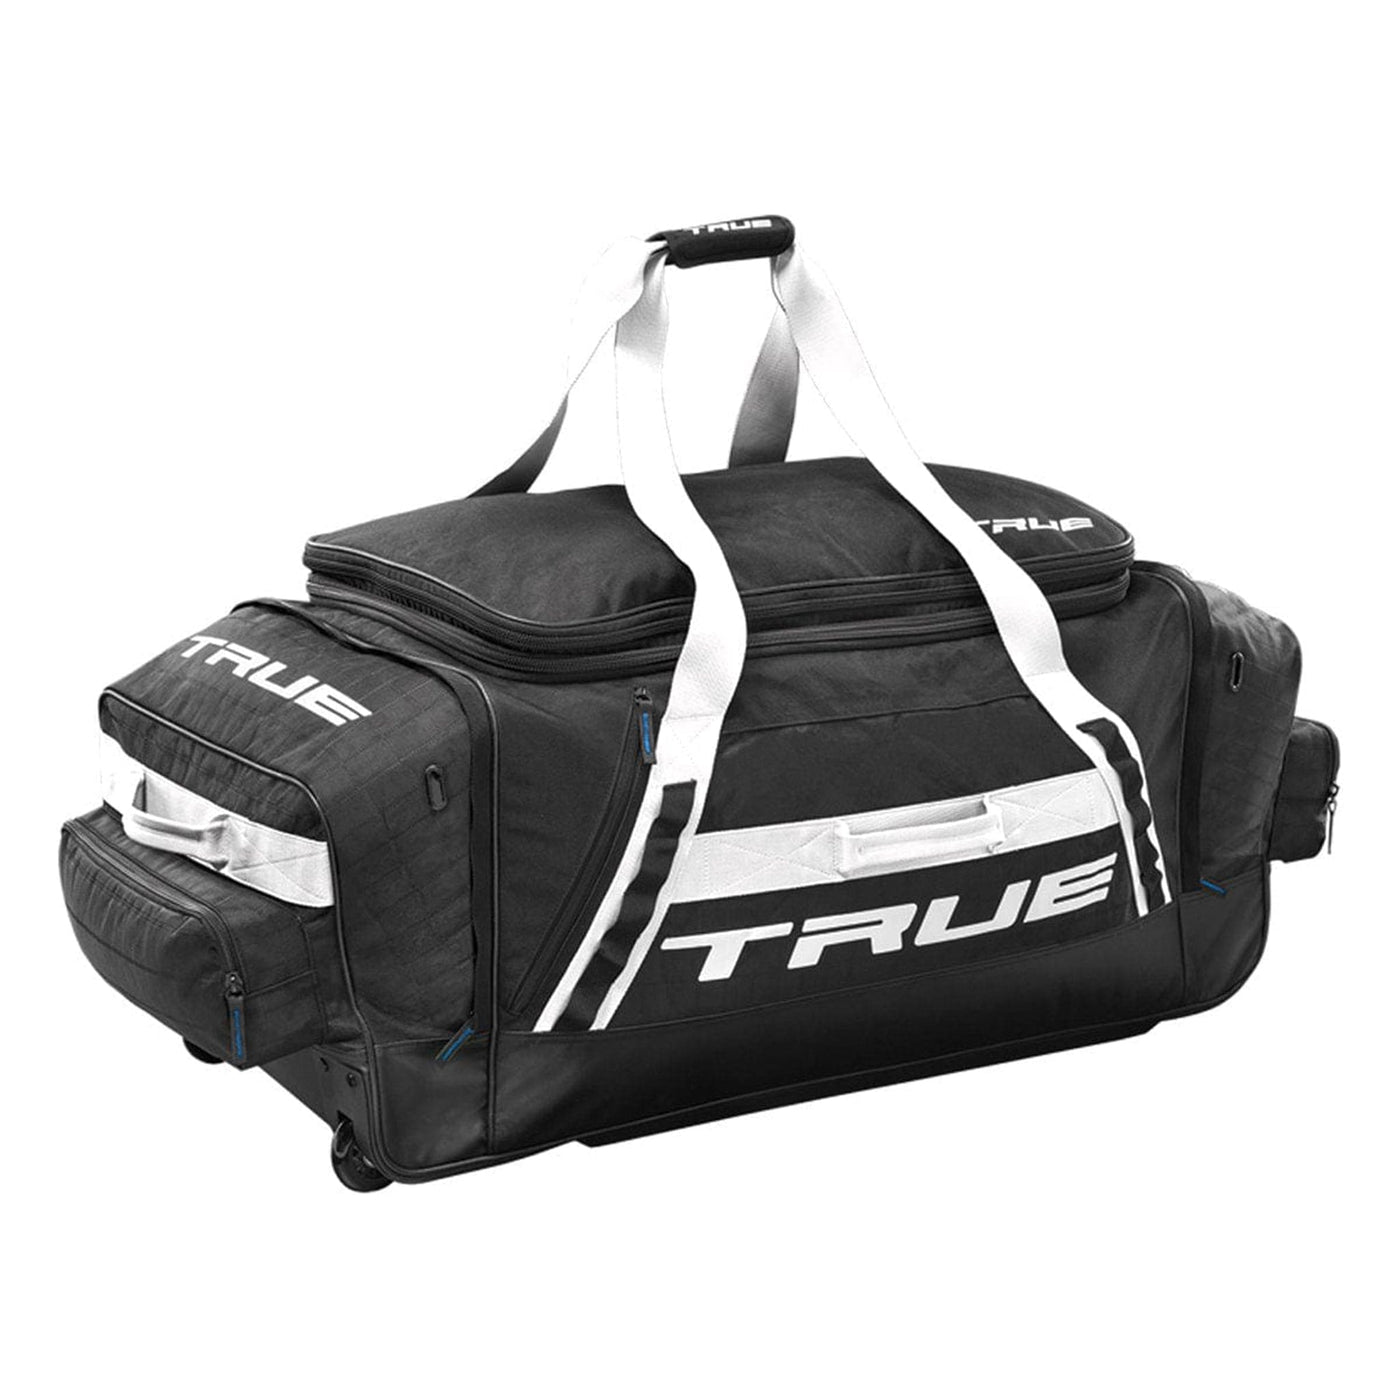 TRUE Elite Senior Wheel Hockey Bag - The Hockey Shop Source For Sports